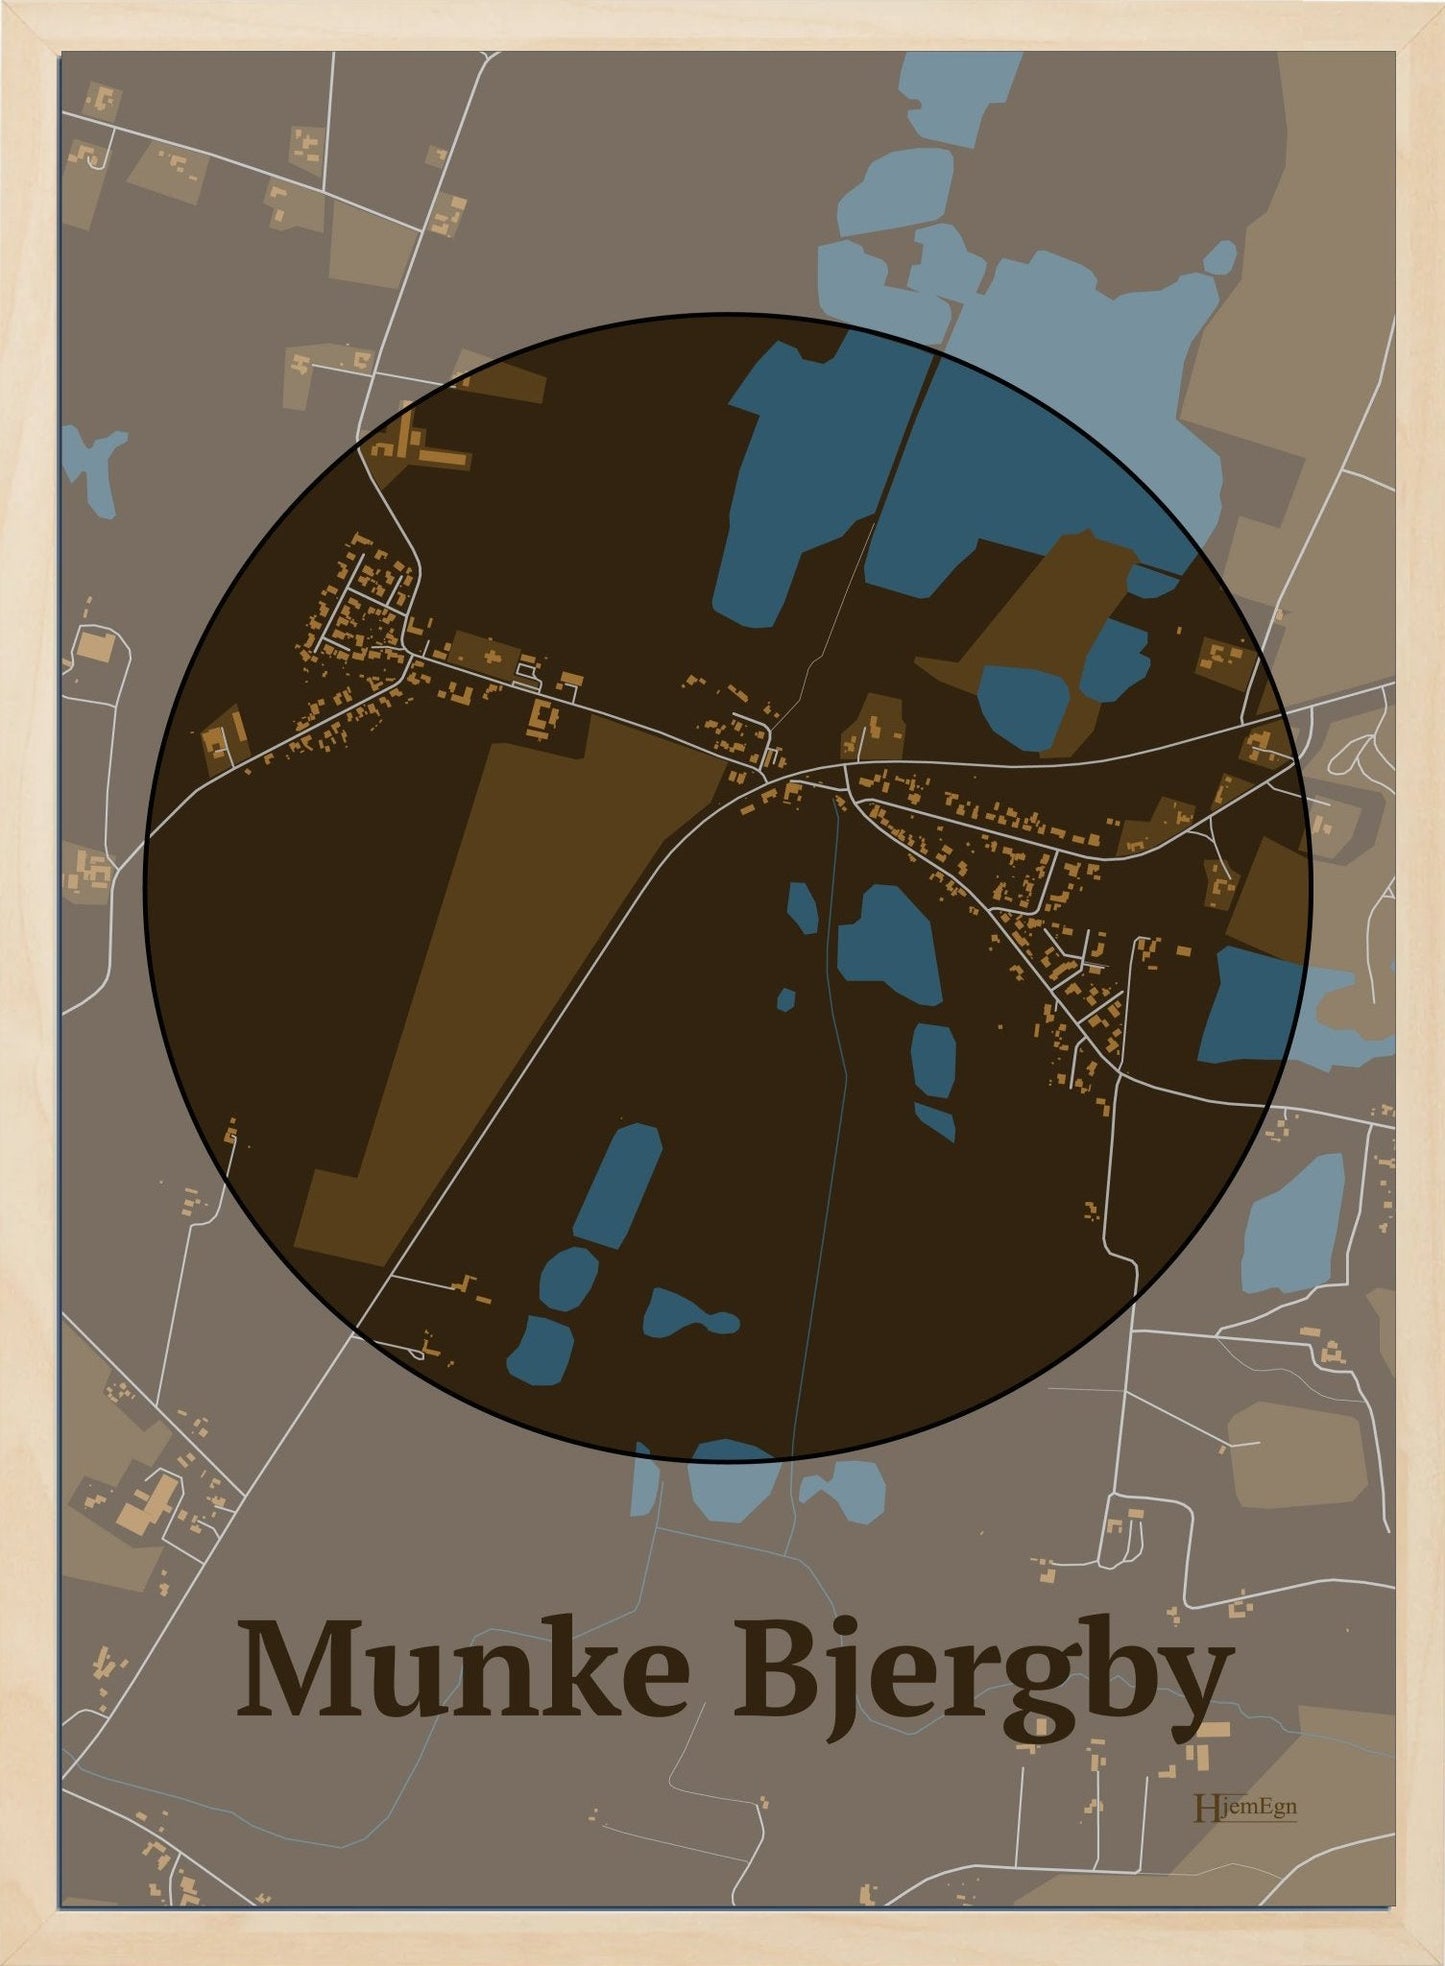 Munke Bjergby plakat i farve mørk brun og HjemEgn.dk design centrum. Design bykort for Munke Bjergby